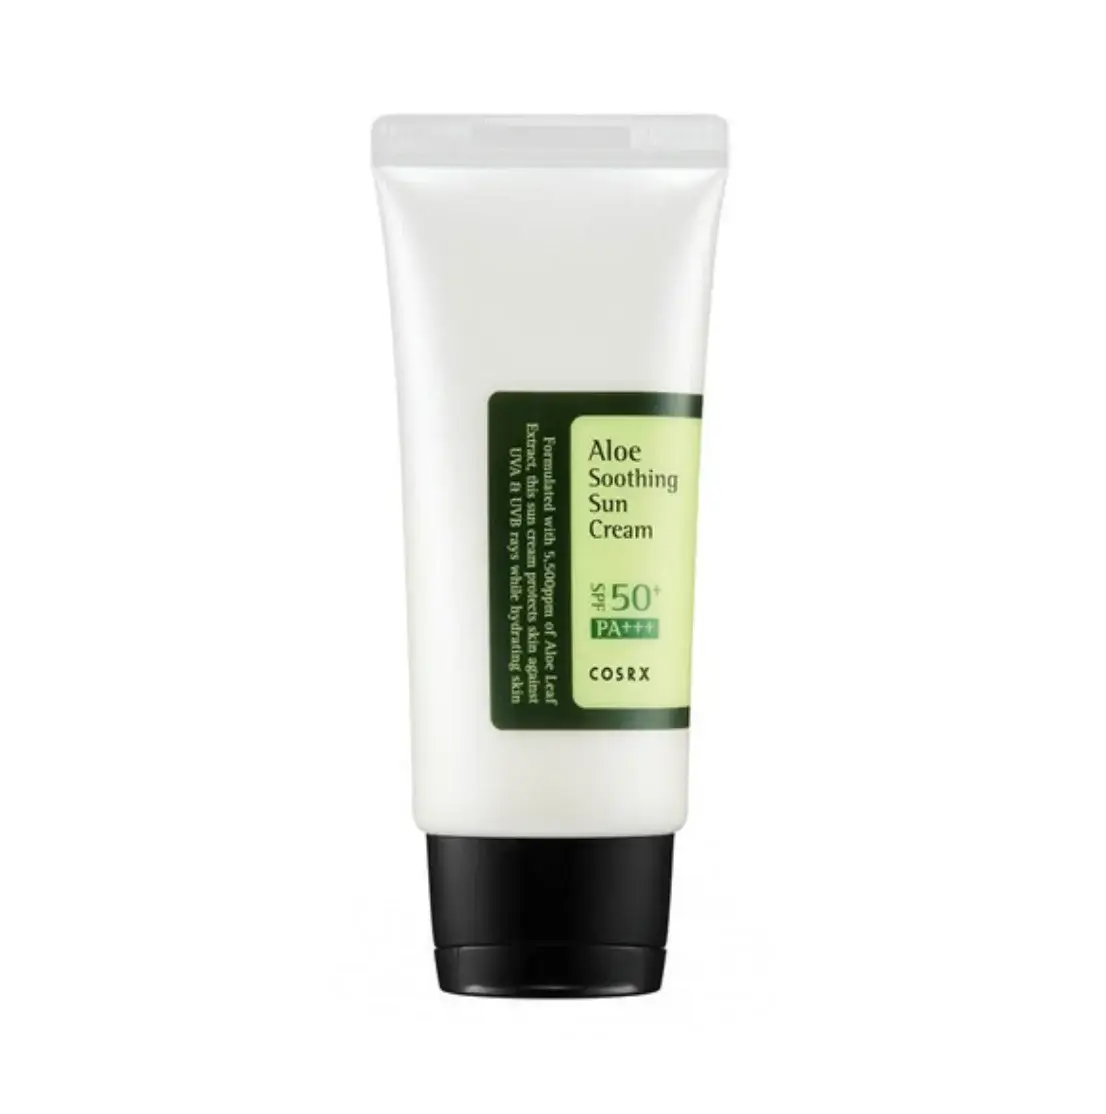 Best Korean skincare suncream- COSRX Aloe Soothing Sun Cream SPF50+ PA+++